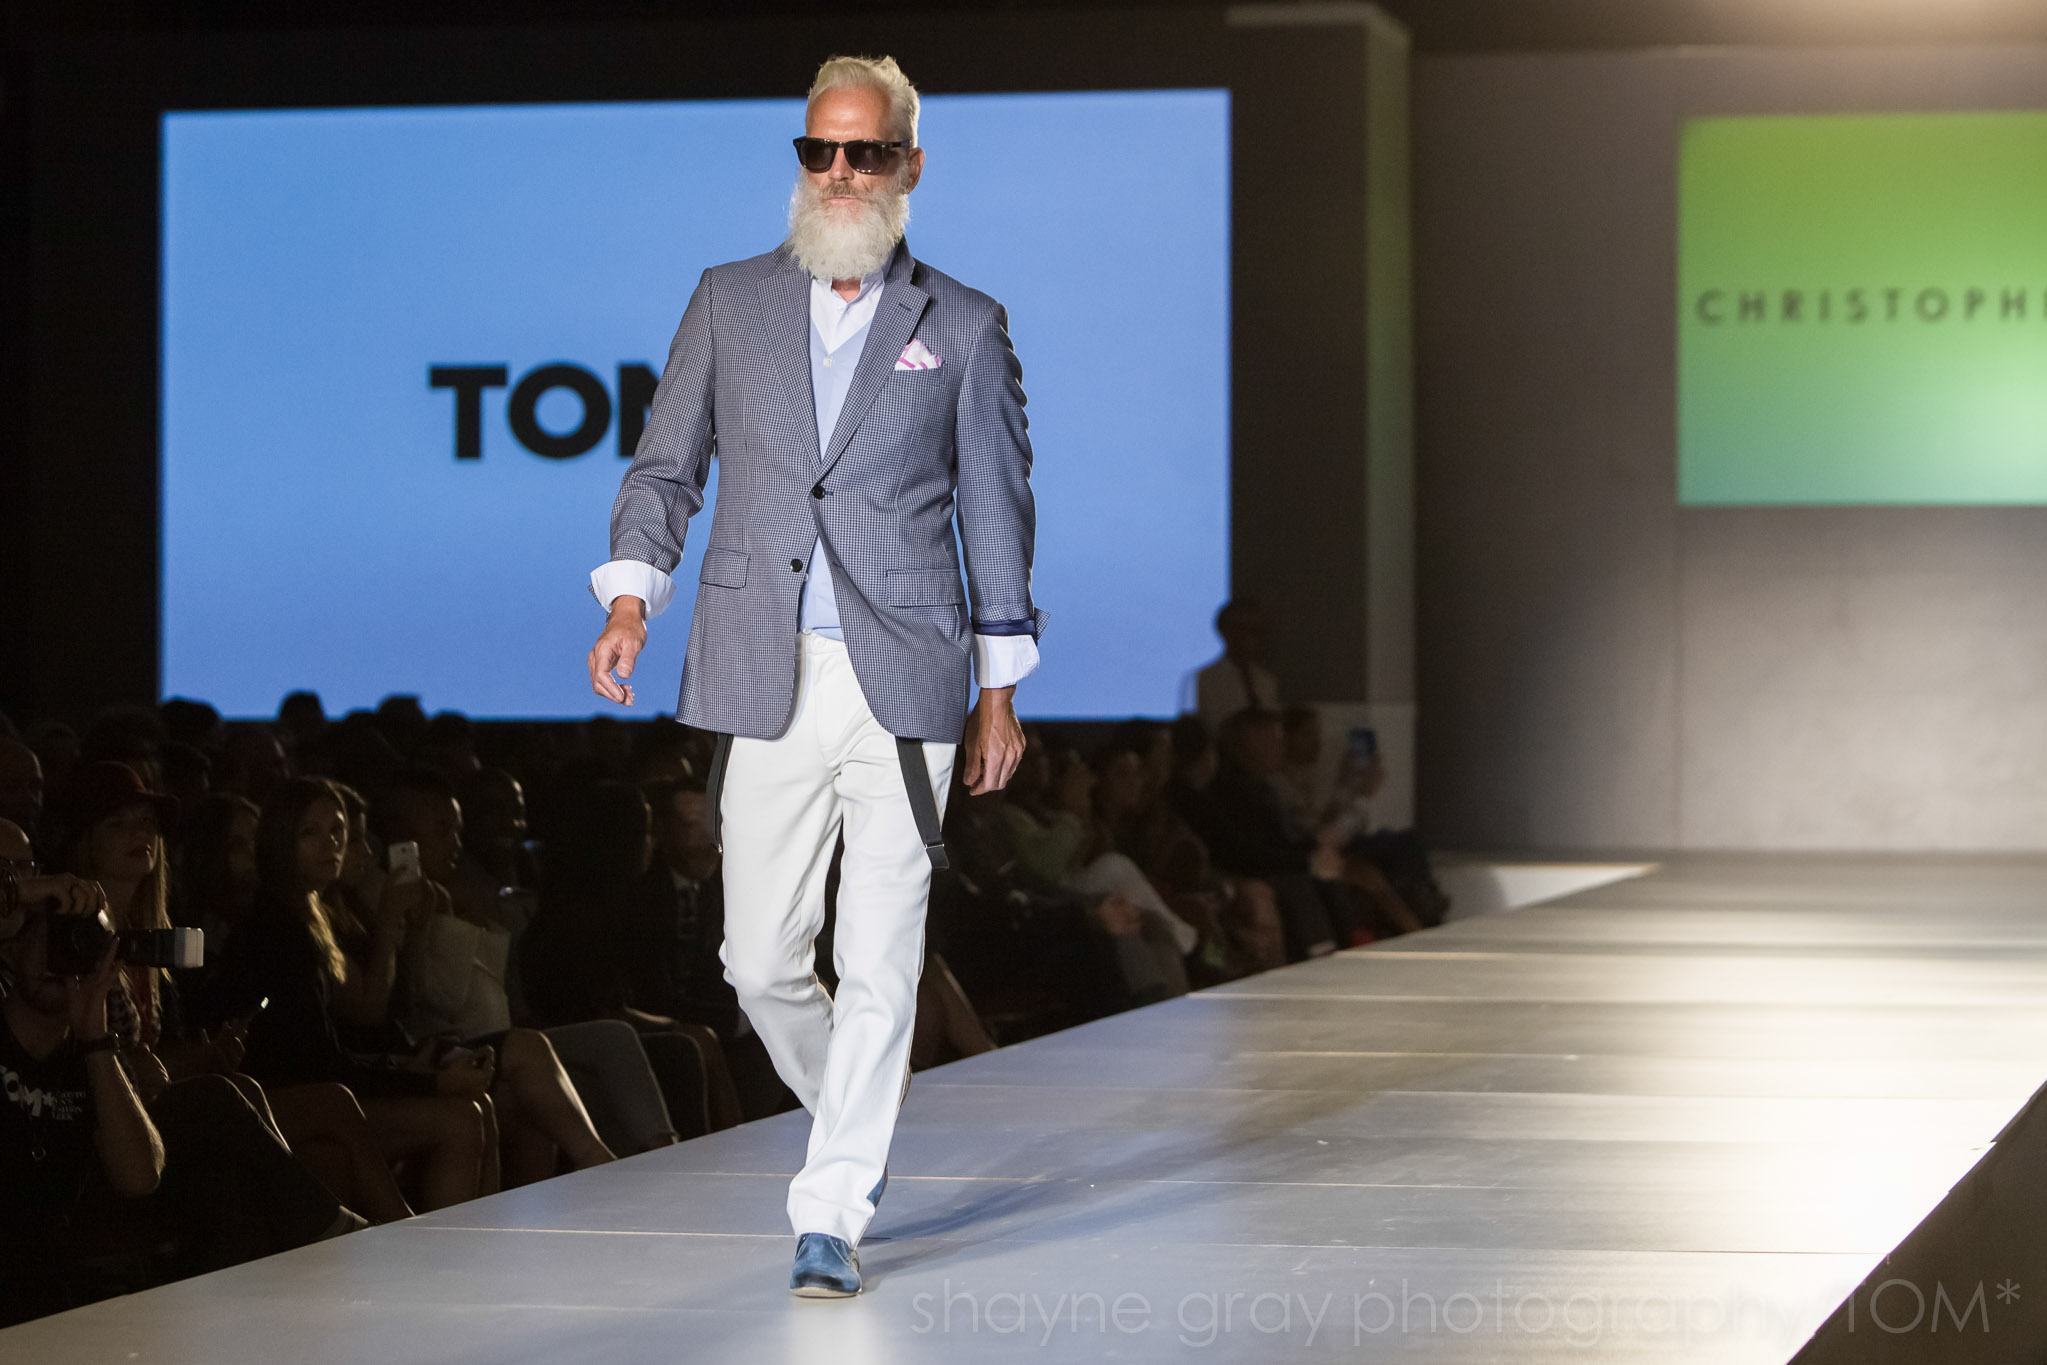 Shayne-Gray-Toronto-men's-fashion_week-TOM-christopher-bates-7179.jpg